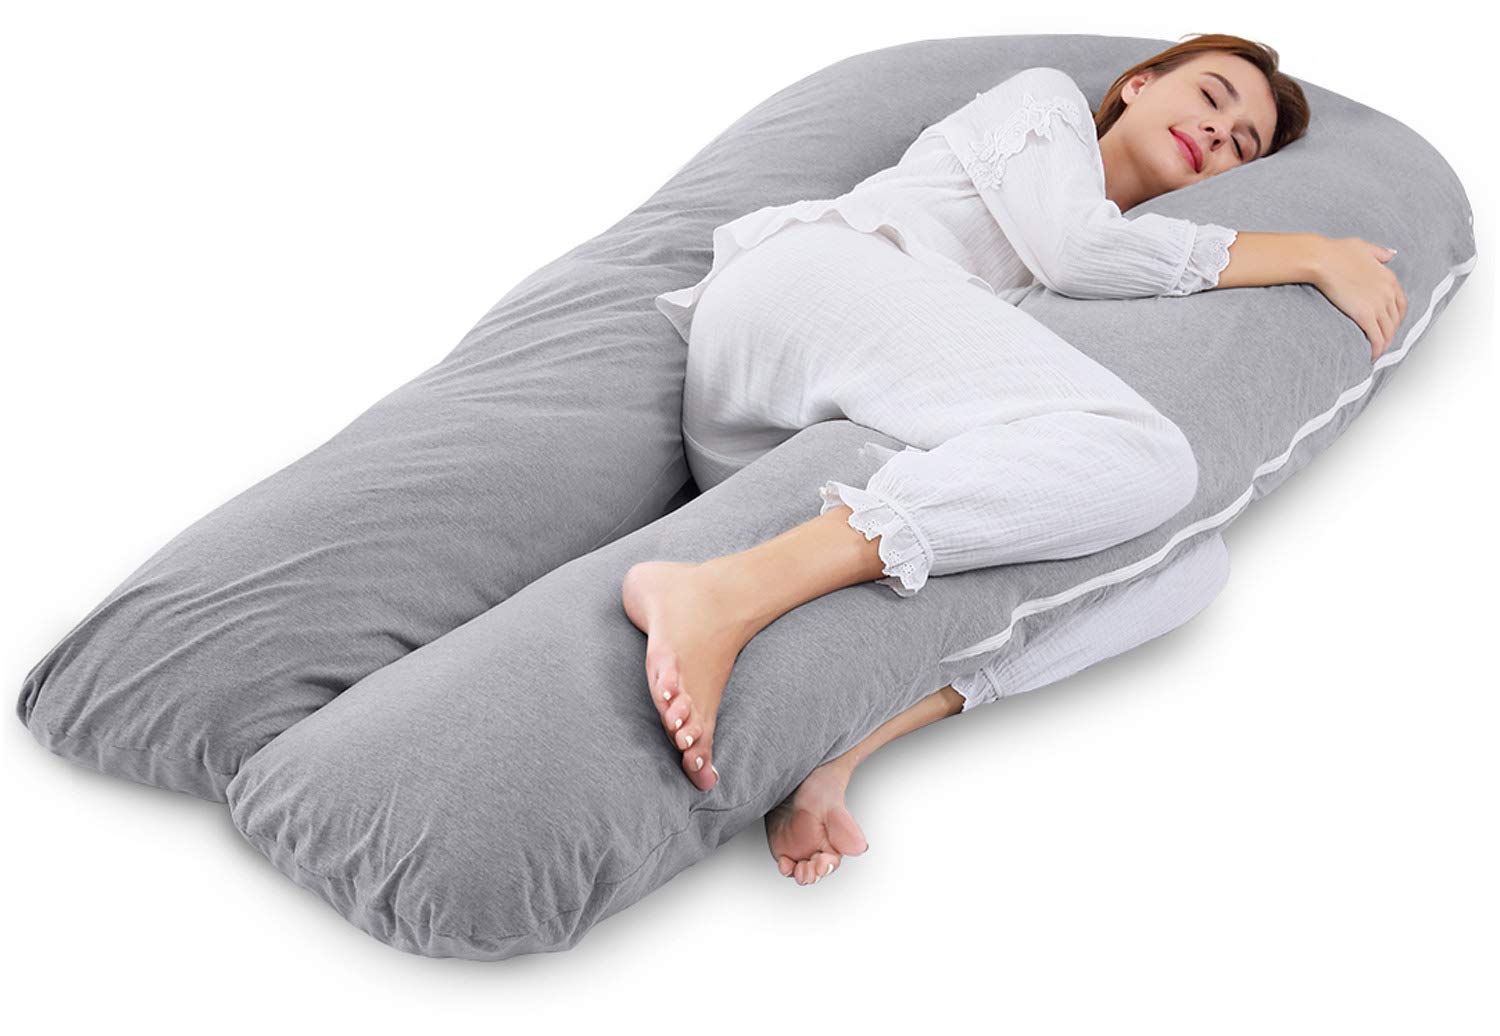 a woman sleeping on a U-shaped body pillow